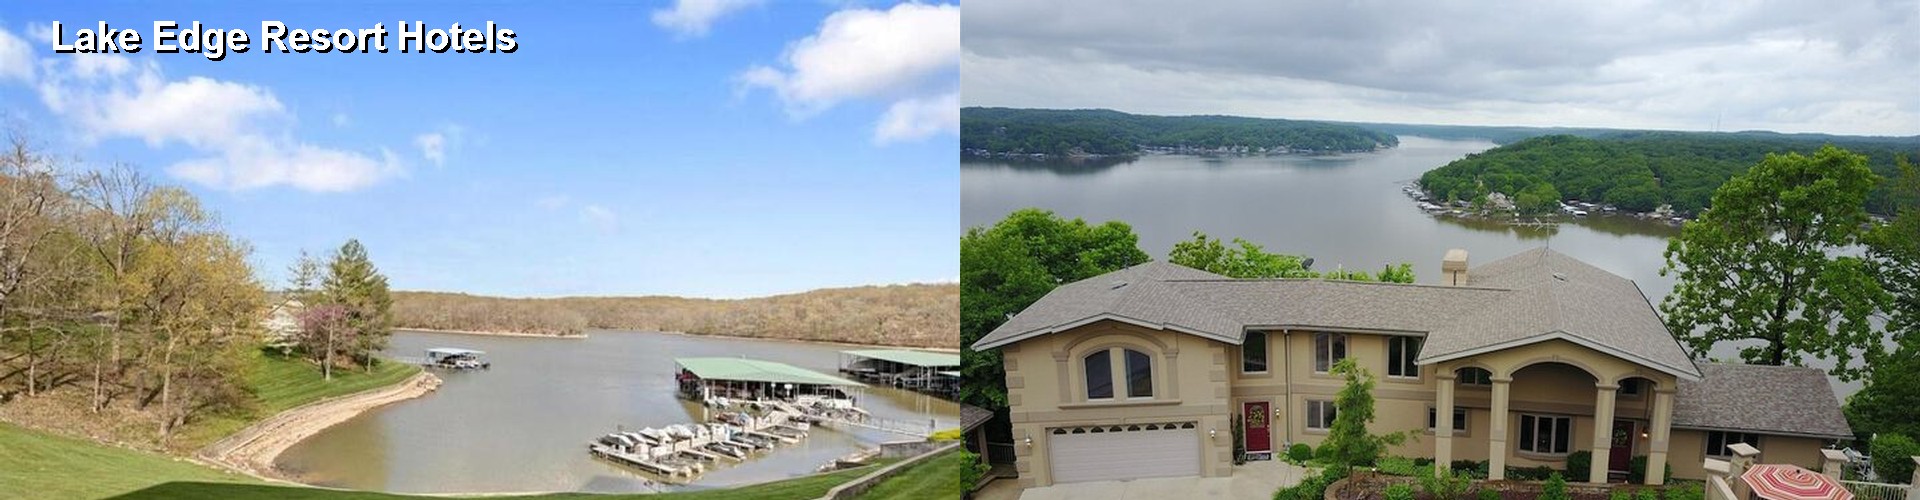 4 Best Hotels near Lake Edge Resort